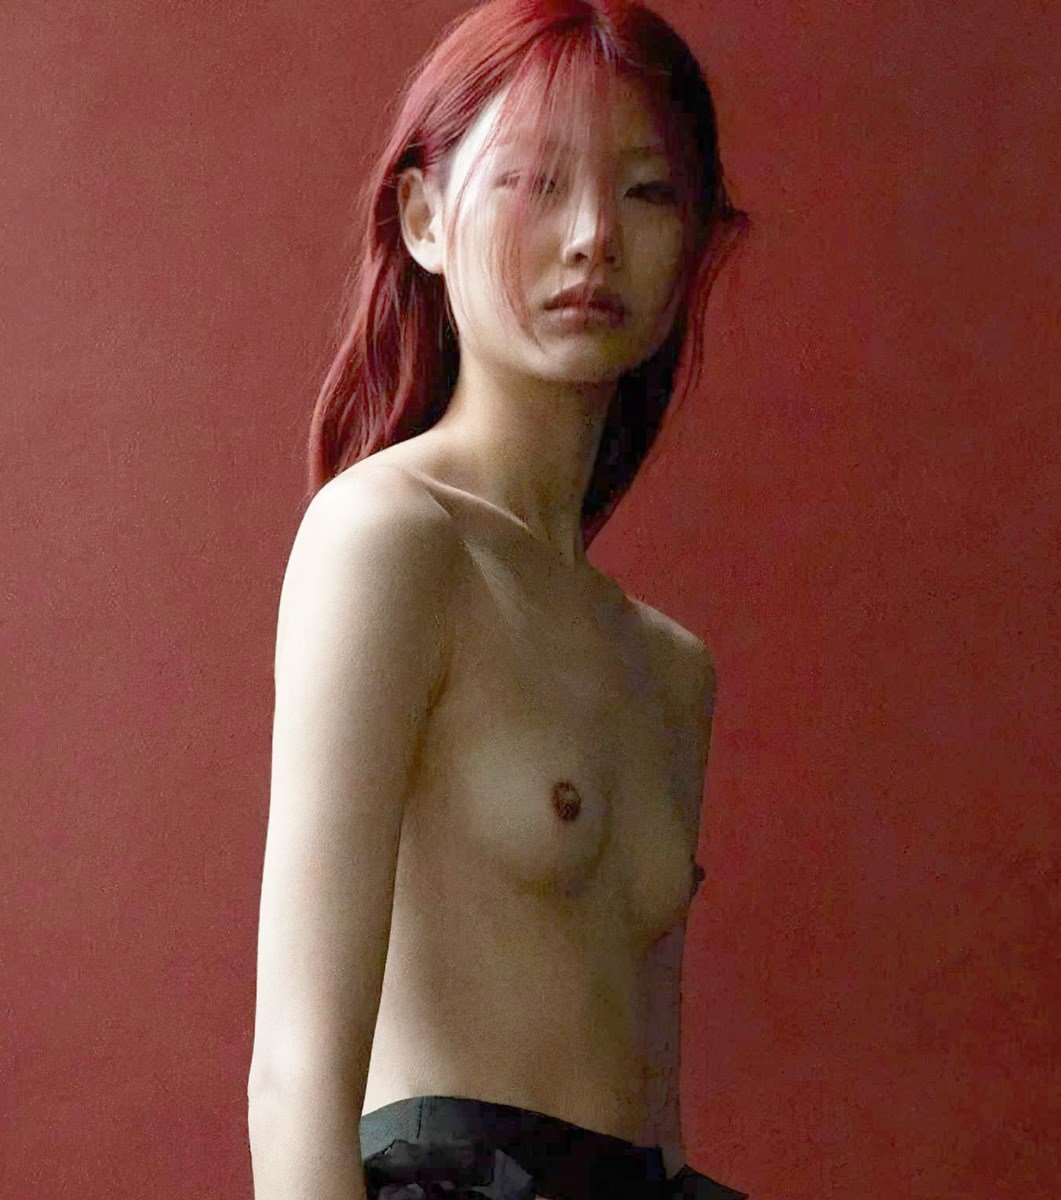 Hoyeon jung nudes